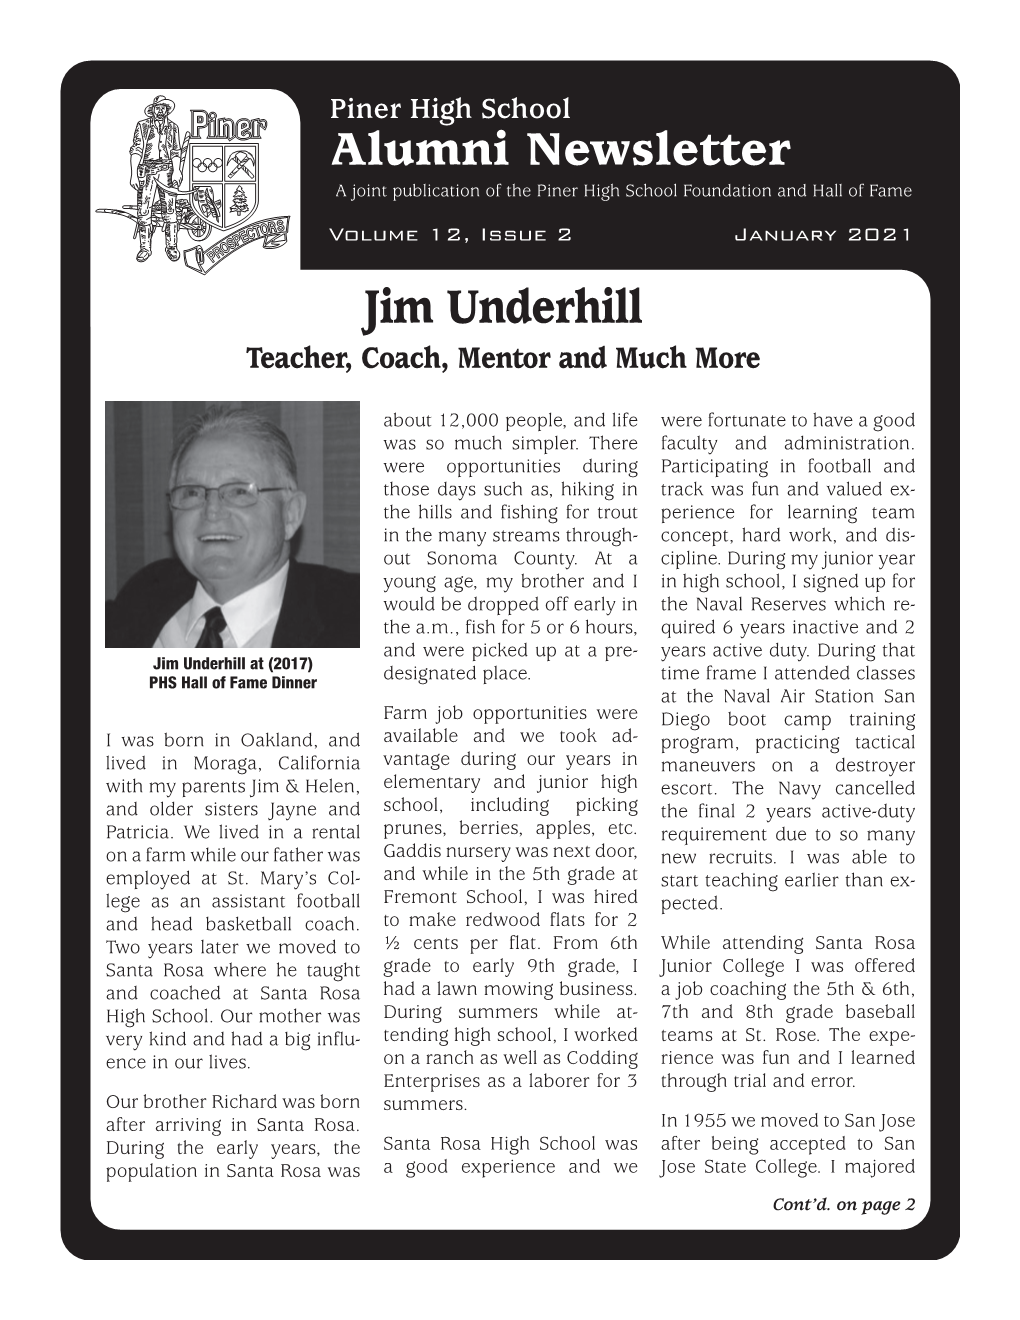 January 2021 Jim Underhill Teacher, Coach, Mentor and Much More